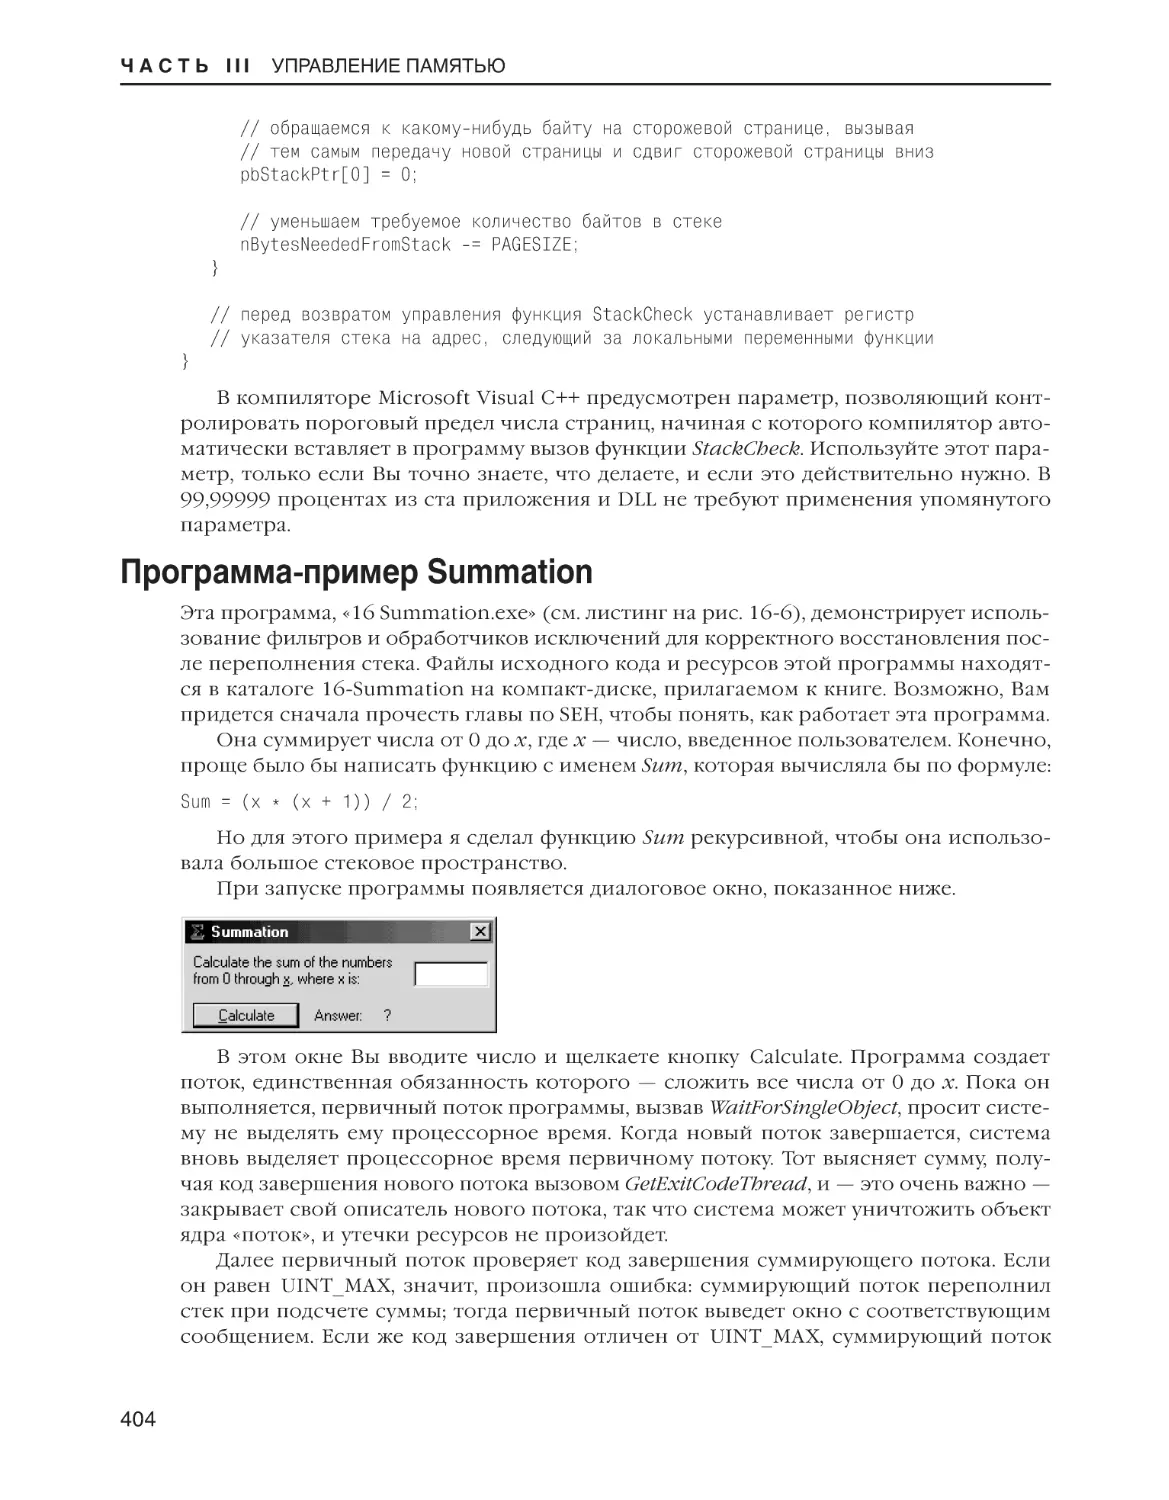 Программа-пример Summation